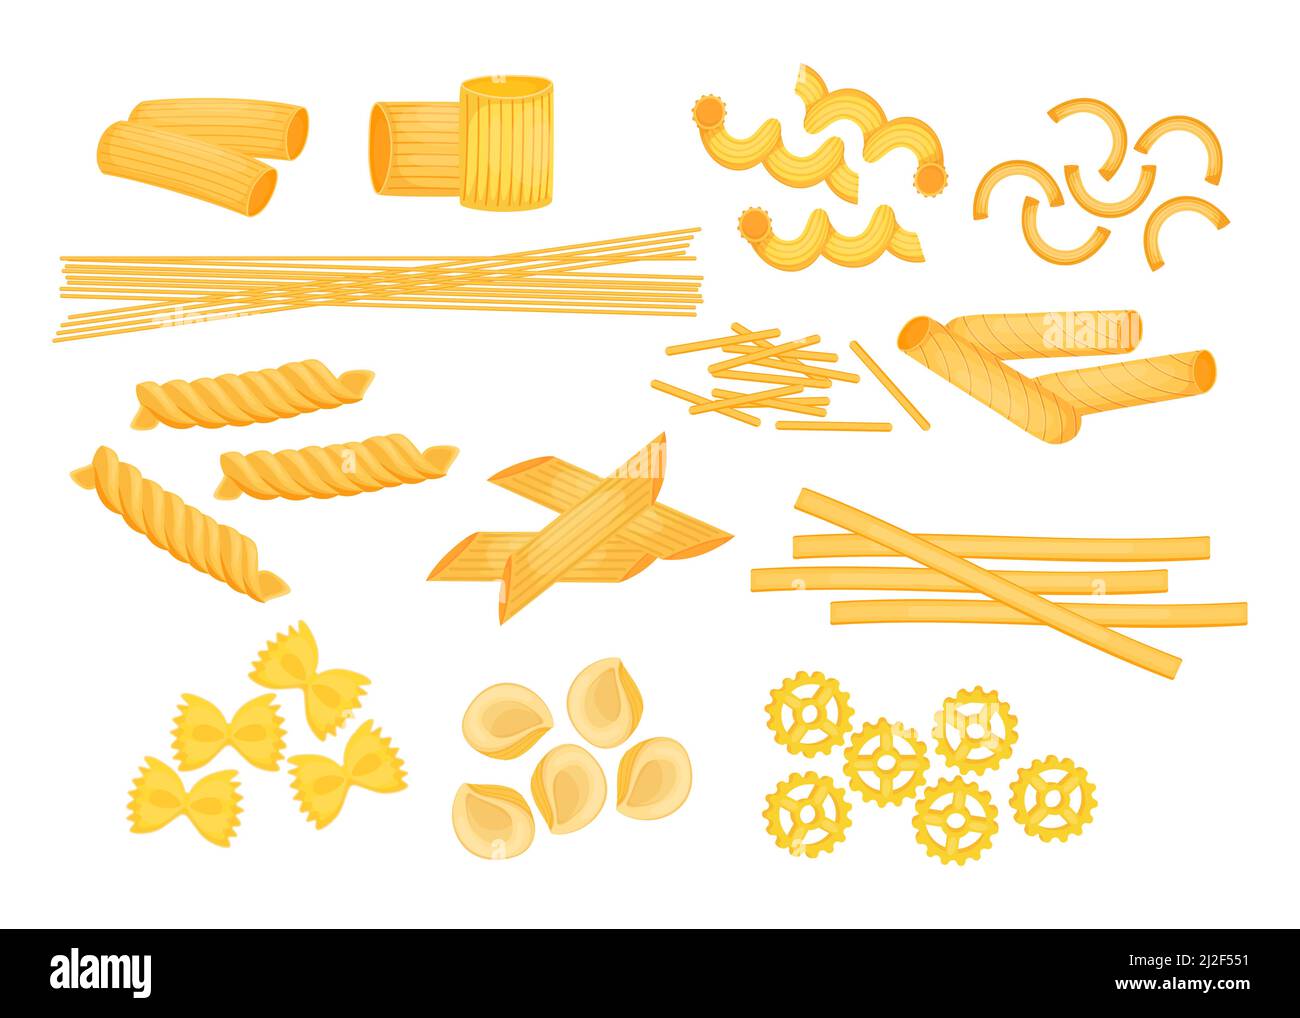 Verschiedene Arten von italienischen Pasta flache Vektor-Illustrationen Set. Rohe Makkaroni, Penne, Farfalle, Ziti, Fusilli, Spaghetti auf weißem Hintergrund isoliert. Stock Vektor